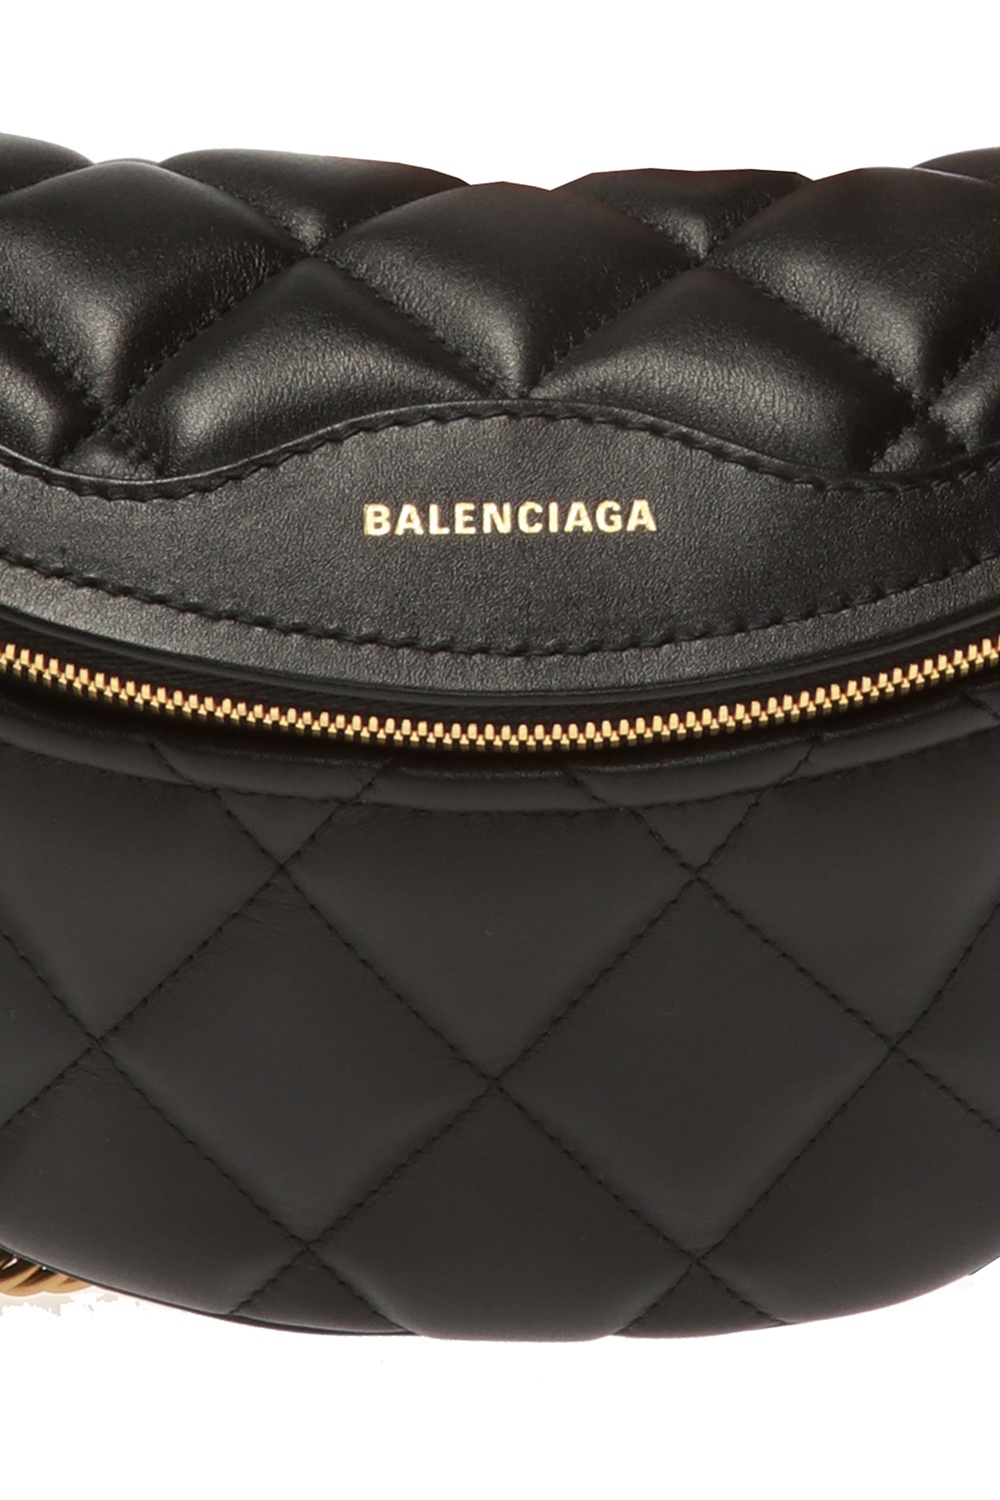 Souvenirs' belt bag Balenciaga - Vitkac Japan